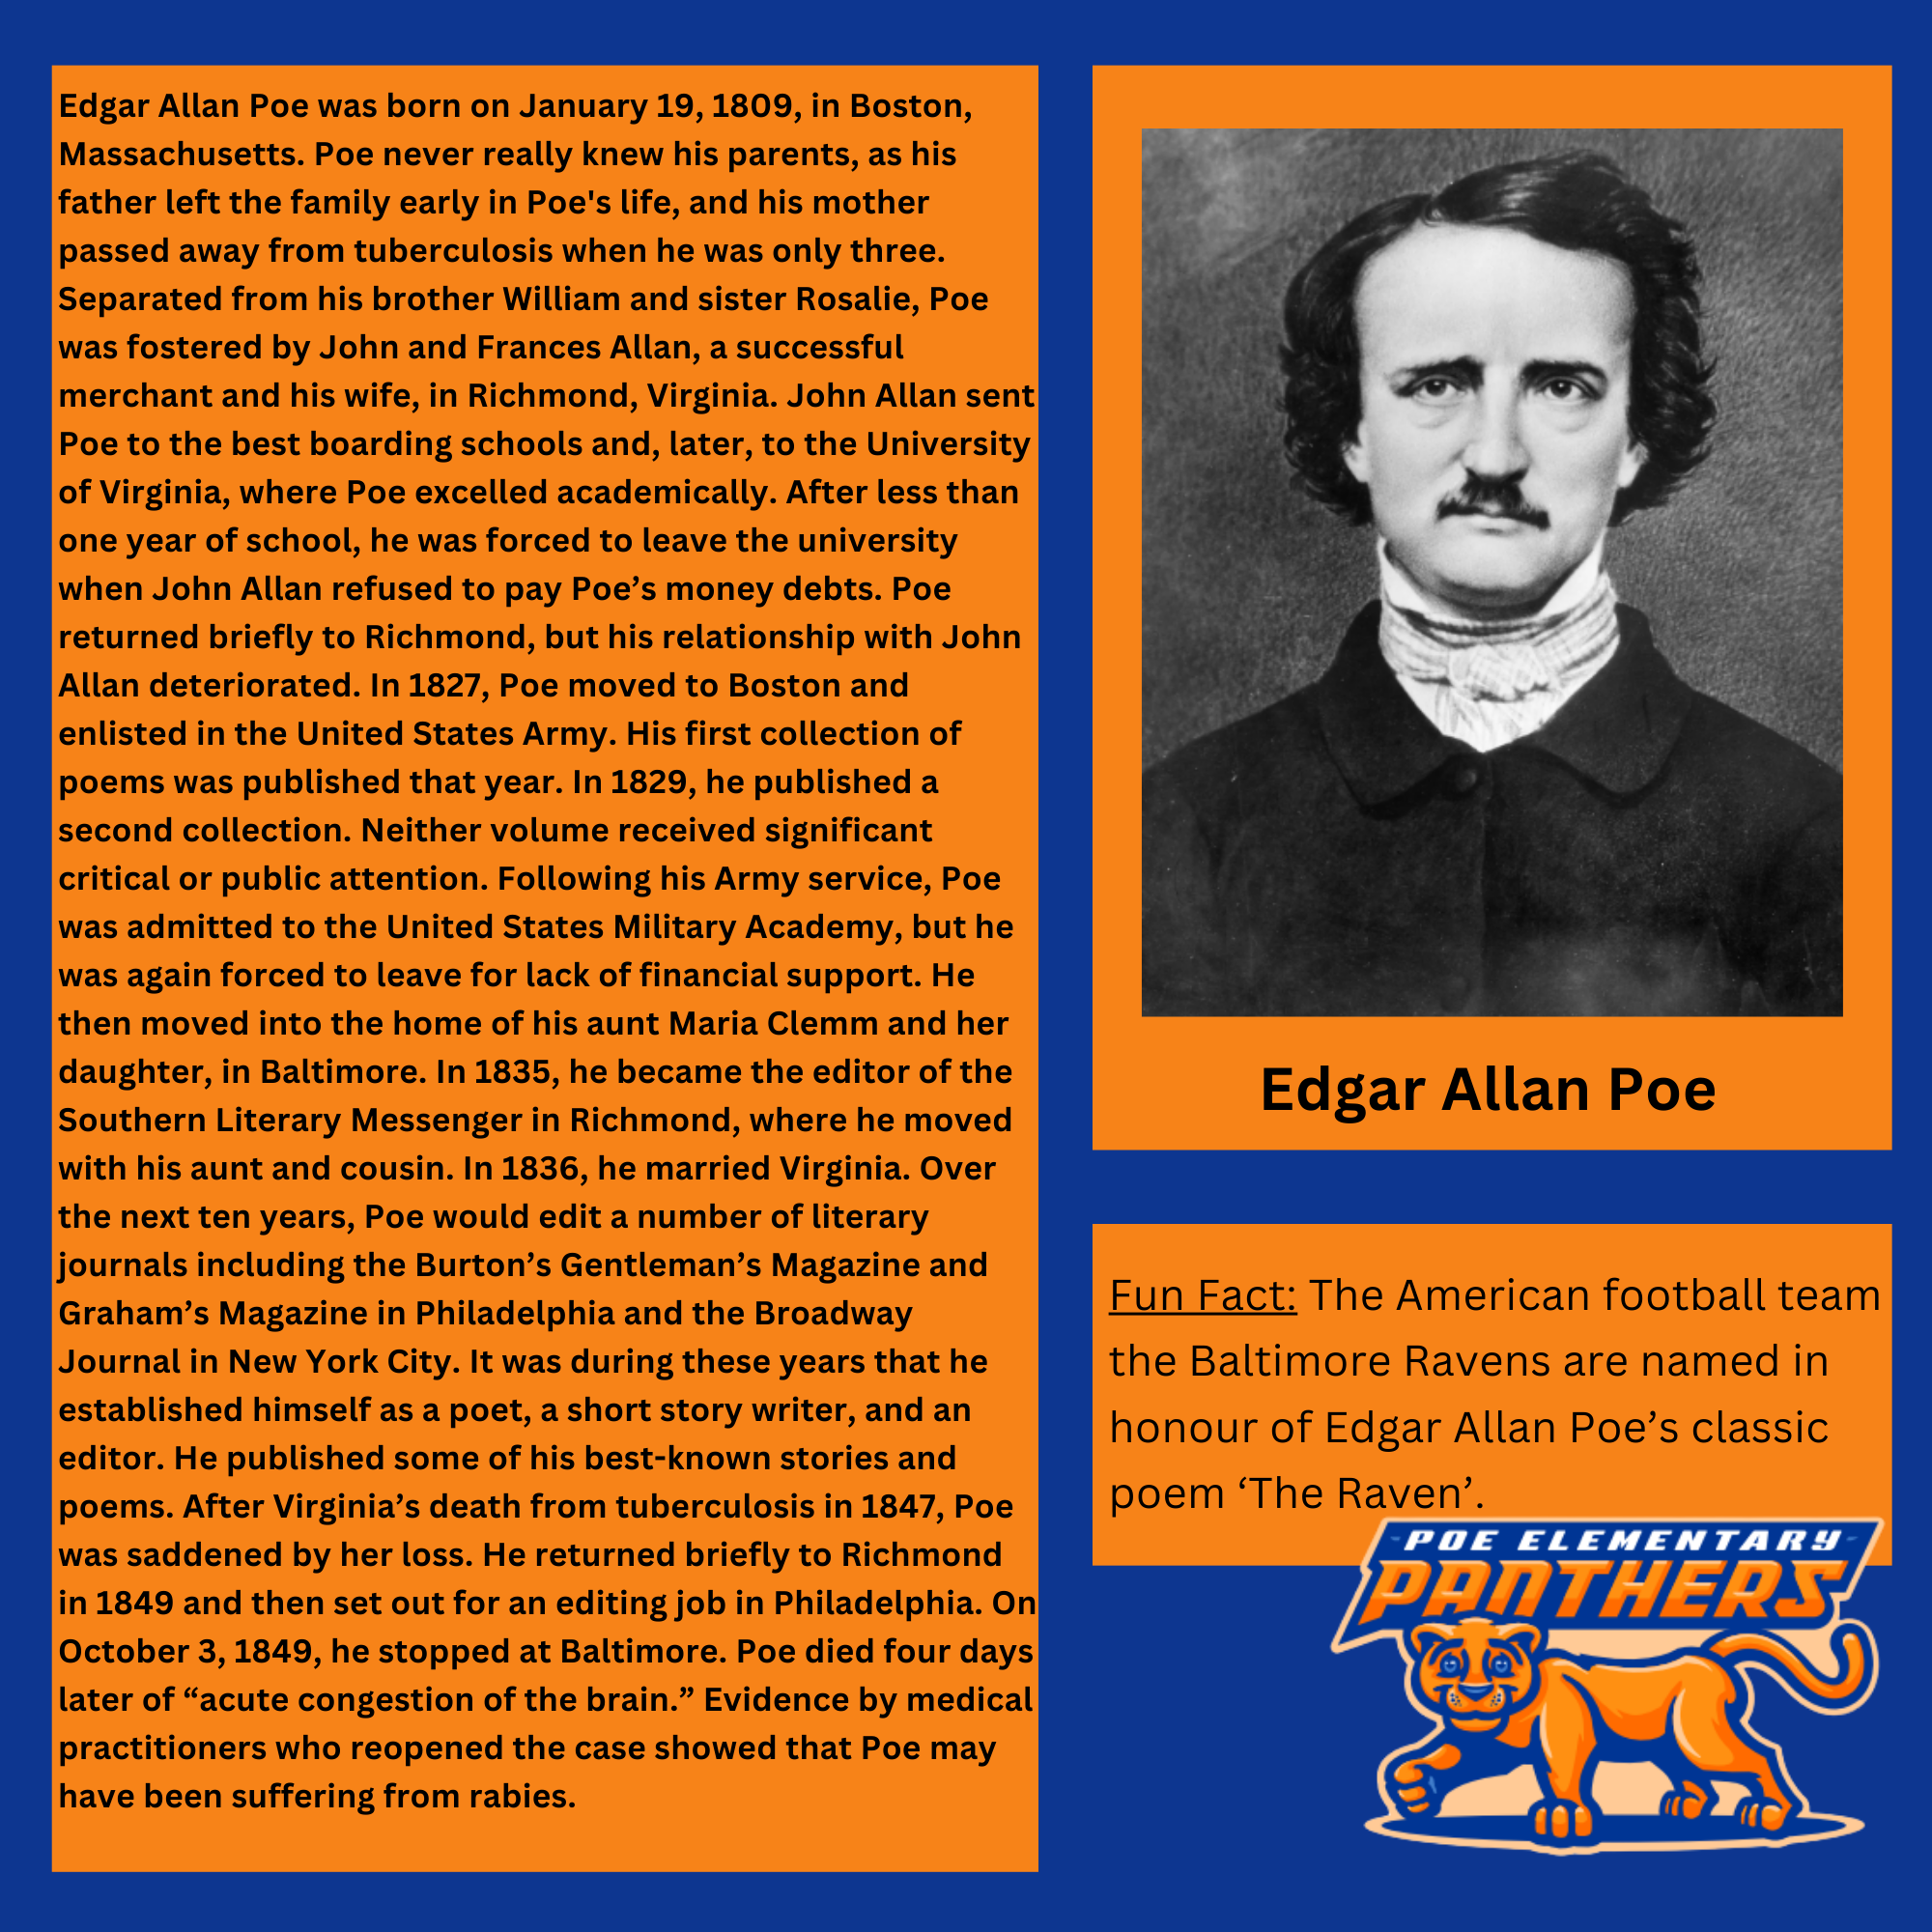 CCSD21 - Edgar Allan Poe